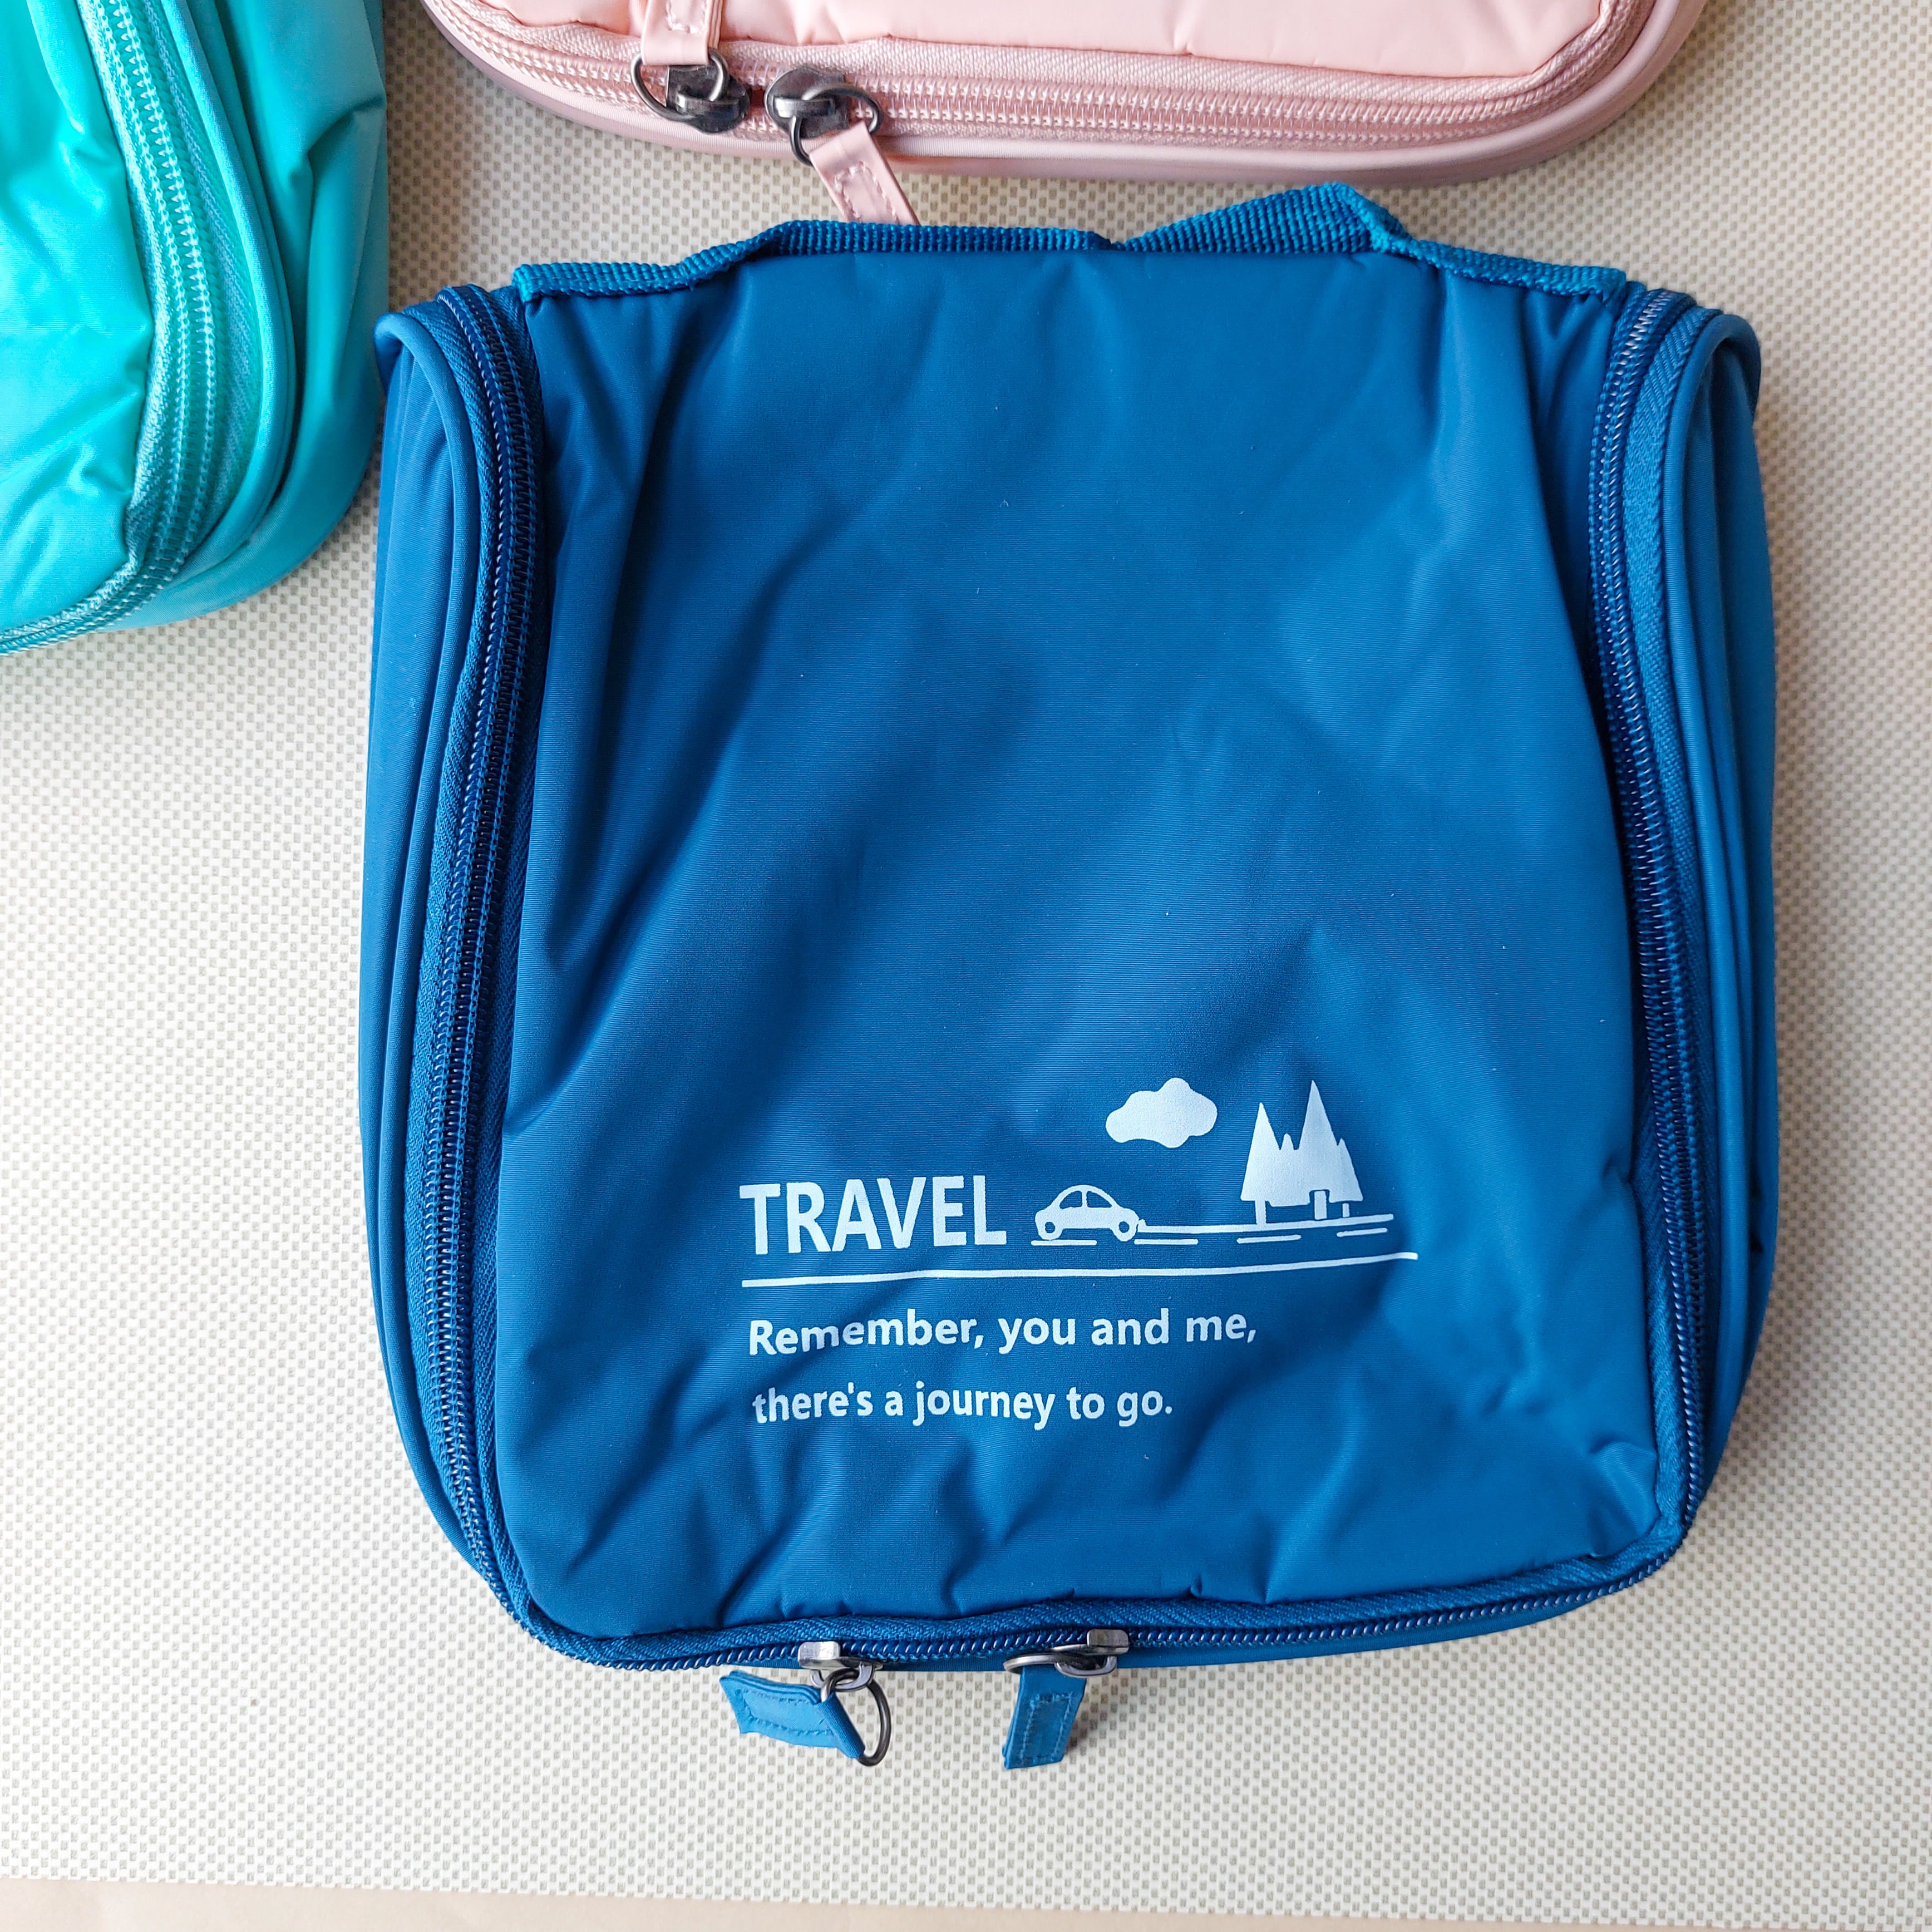 Premium Traveling Toiletry Bags